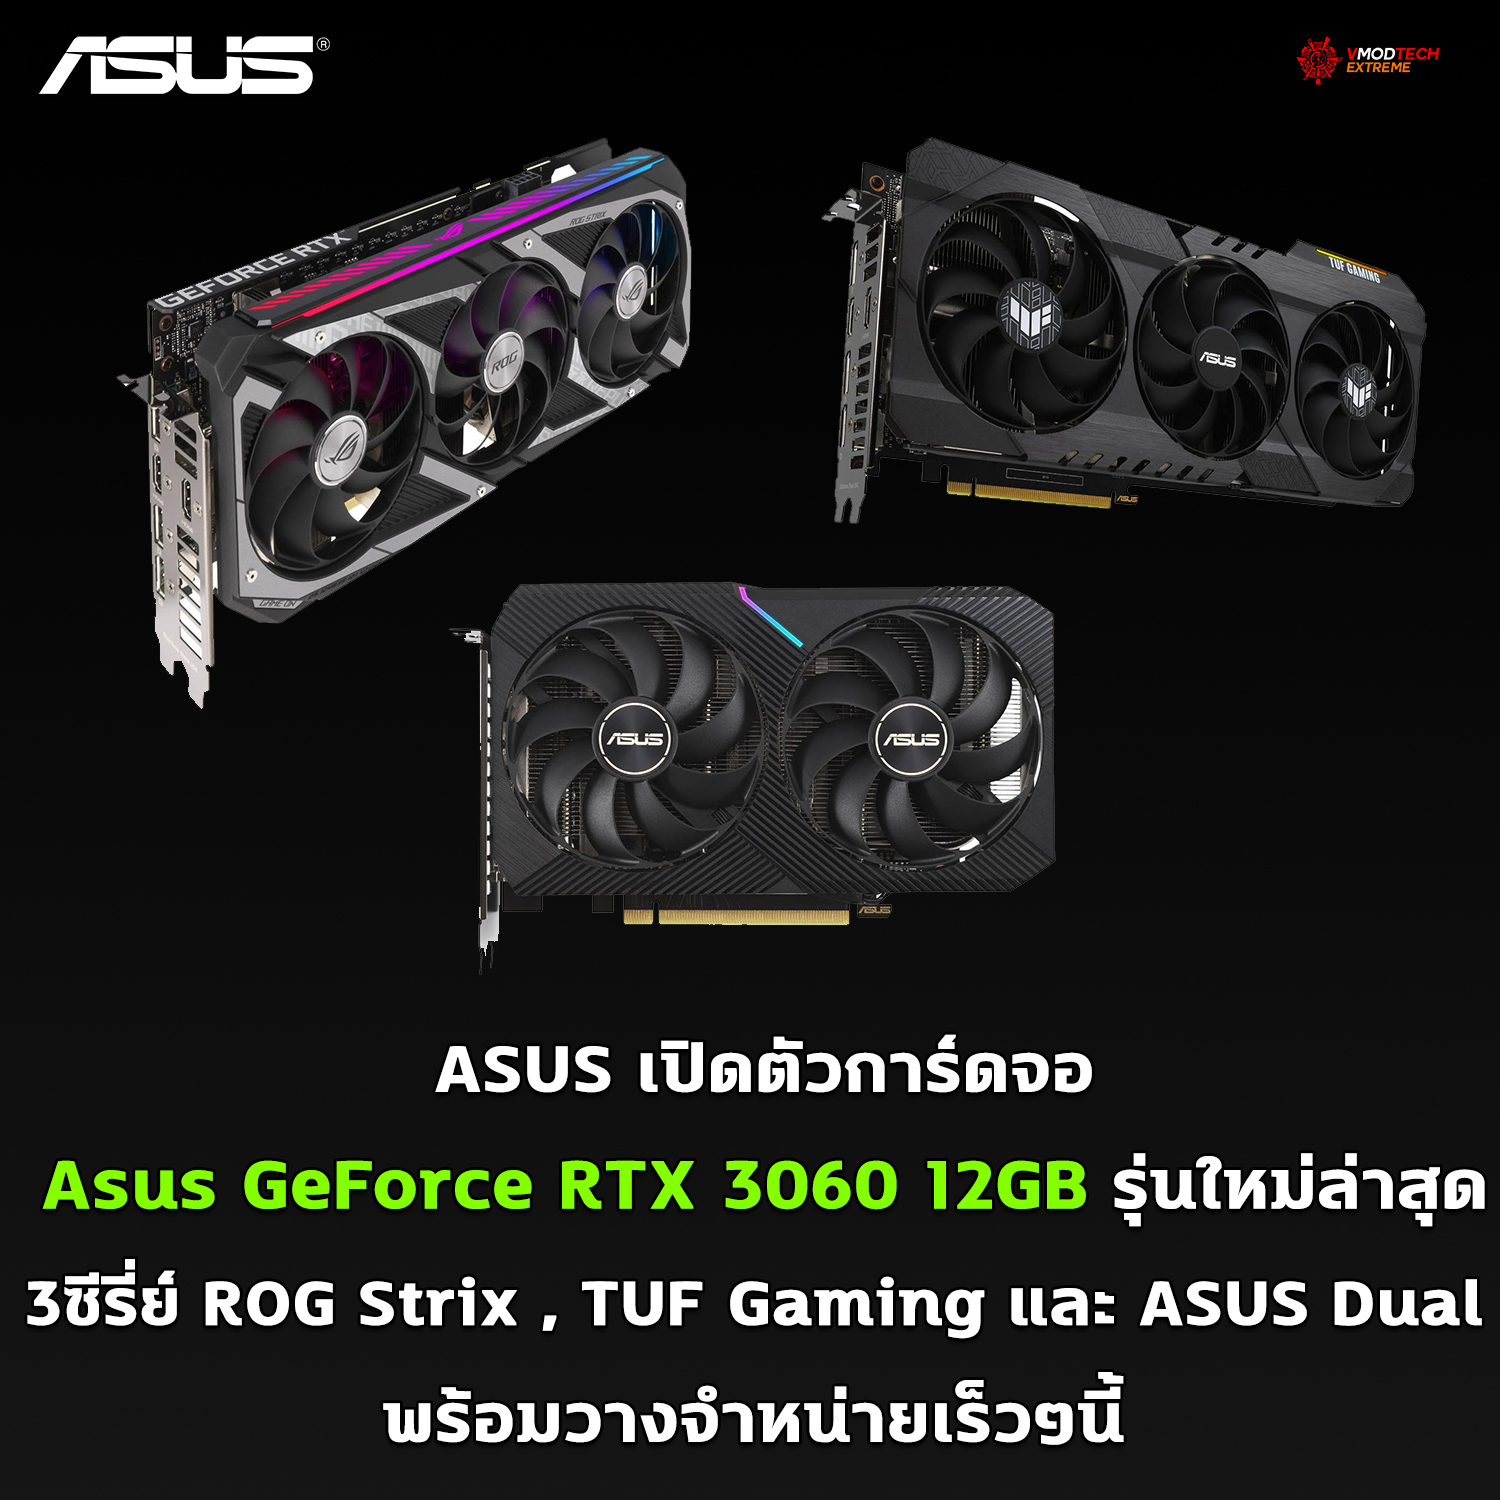 asus geforce rtx 3060 12gb ASUS เปิดตัวการ์ดจอ Asus GeForce RTX 3060 12GB รุ่นใหม่ล่าสุด 3ซีรี่ย์ ROG Strix , TUF Gaming และ ASUS Dual พร้อมวางจำหน่ายเร็วๆนี้ 